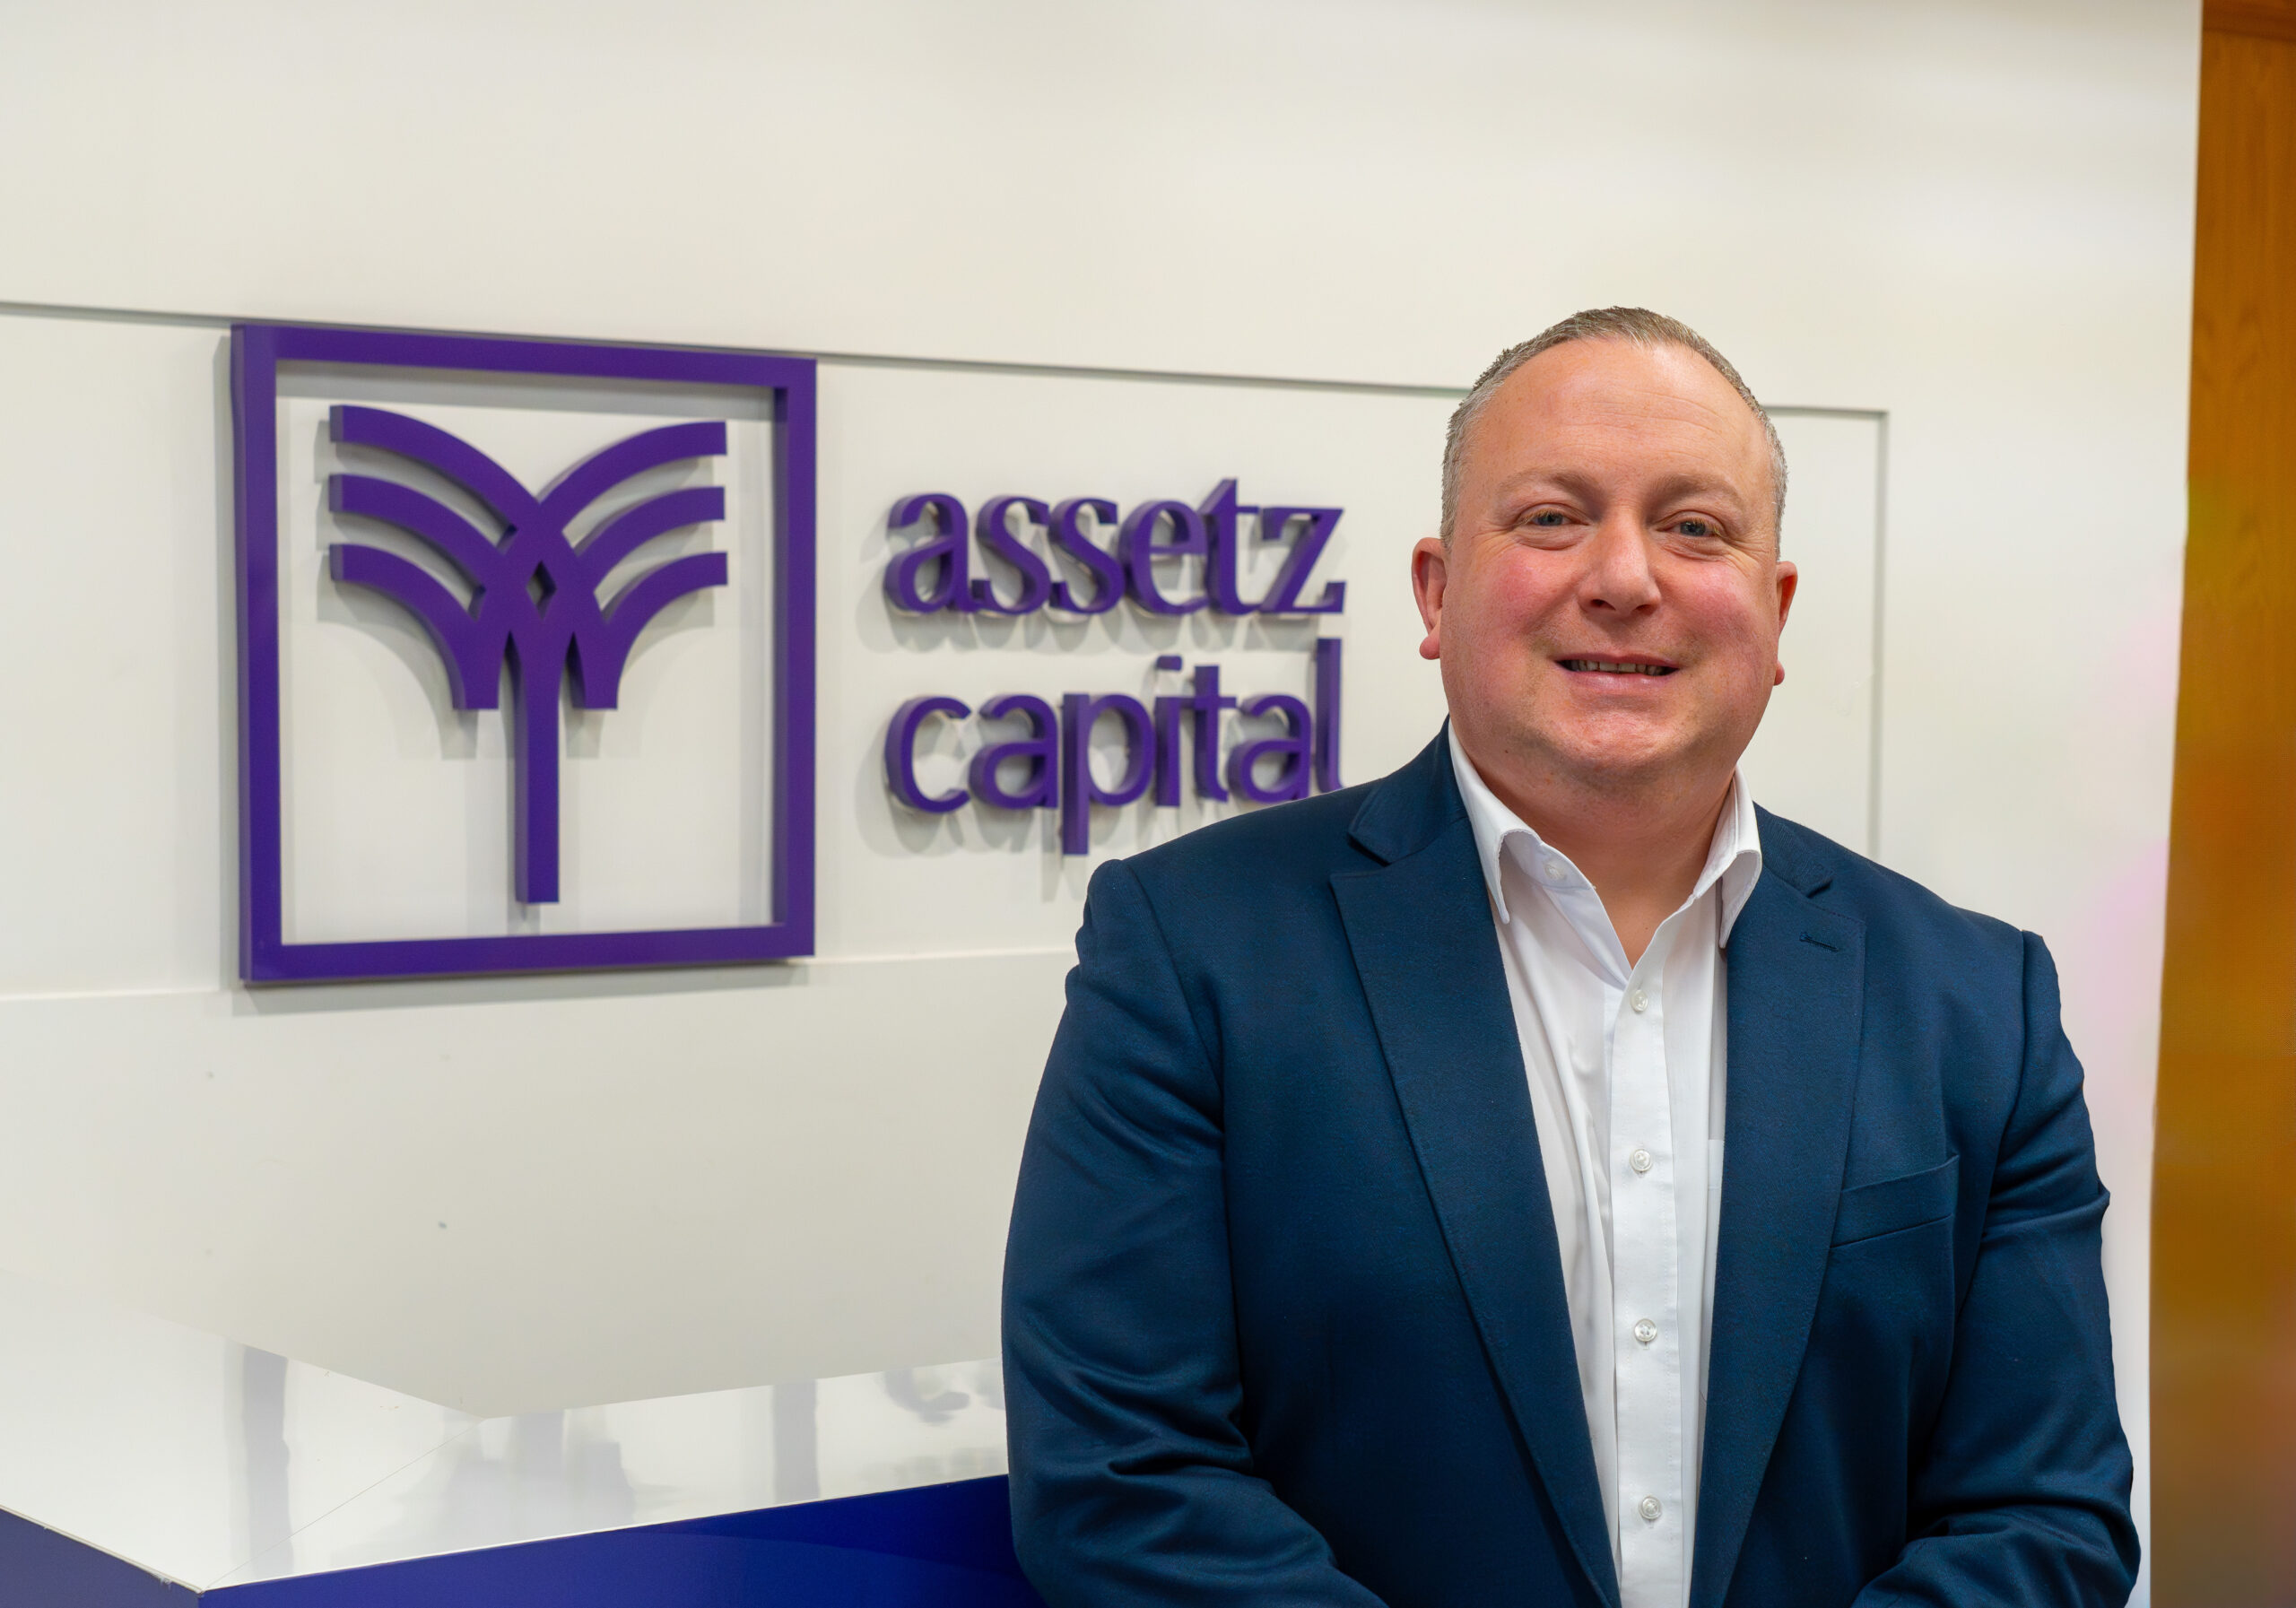 Assetz Capital launches new £100m Planning Assistance Loan scheme 